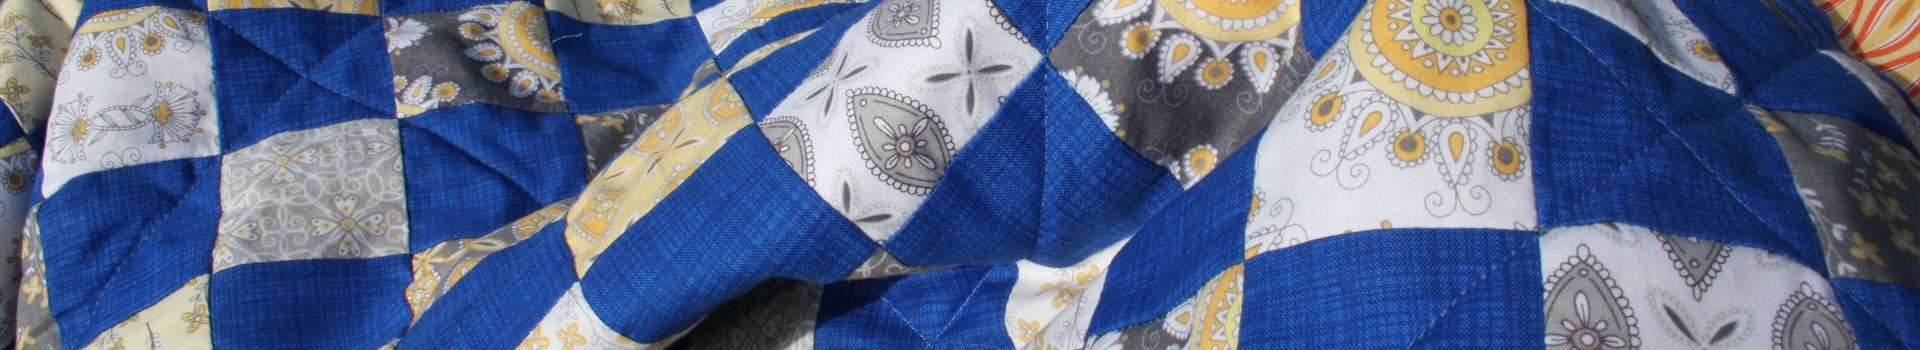 Sew Grateful Giveaway: Thai silk